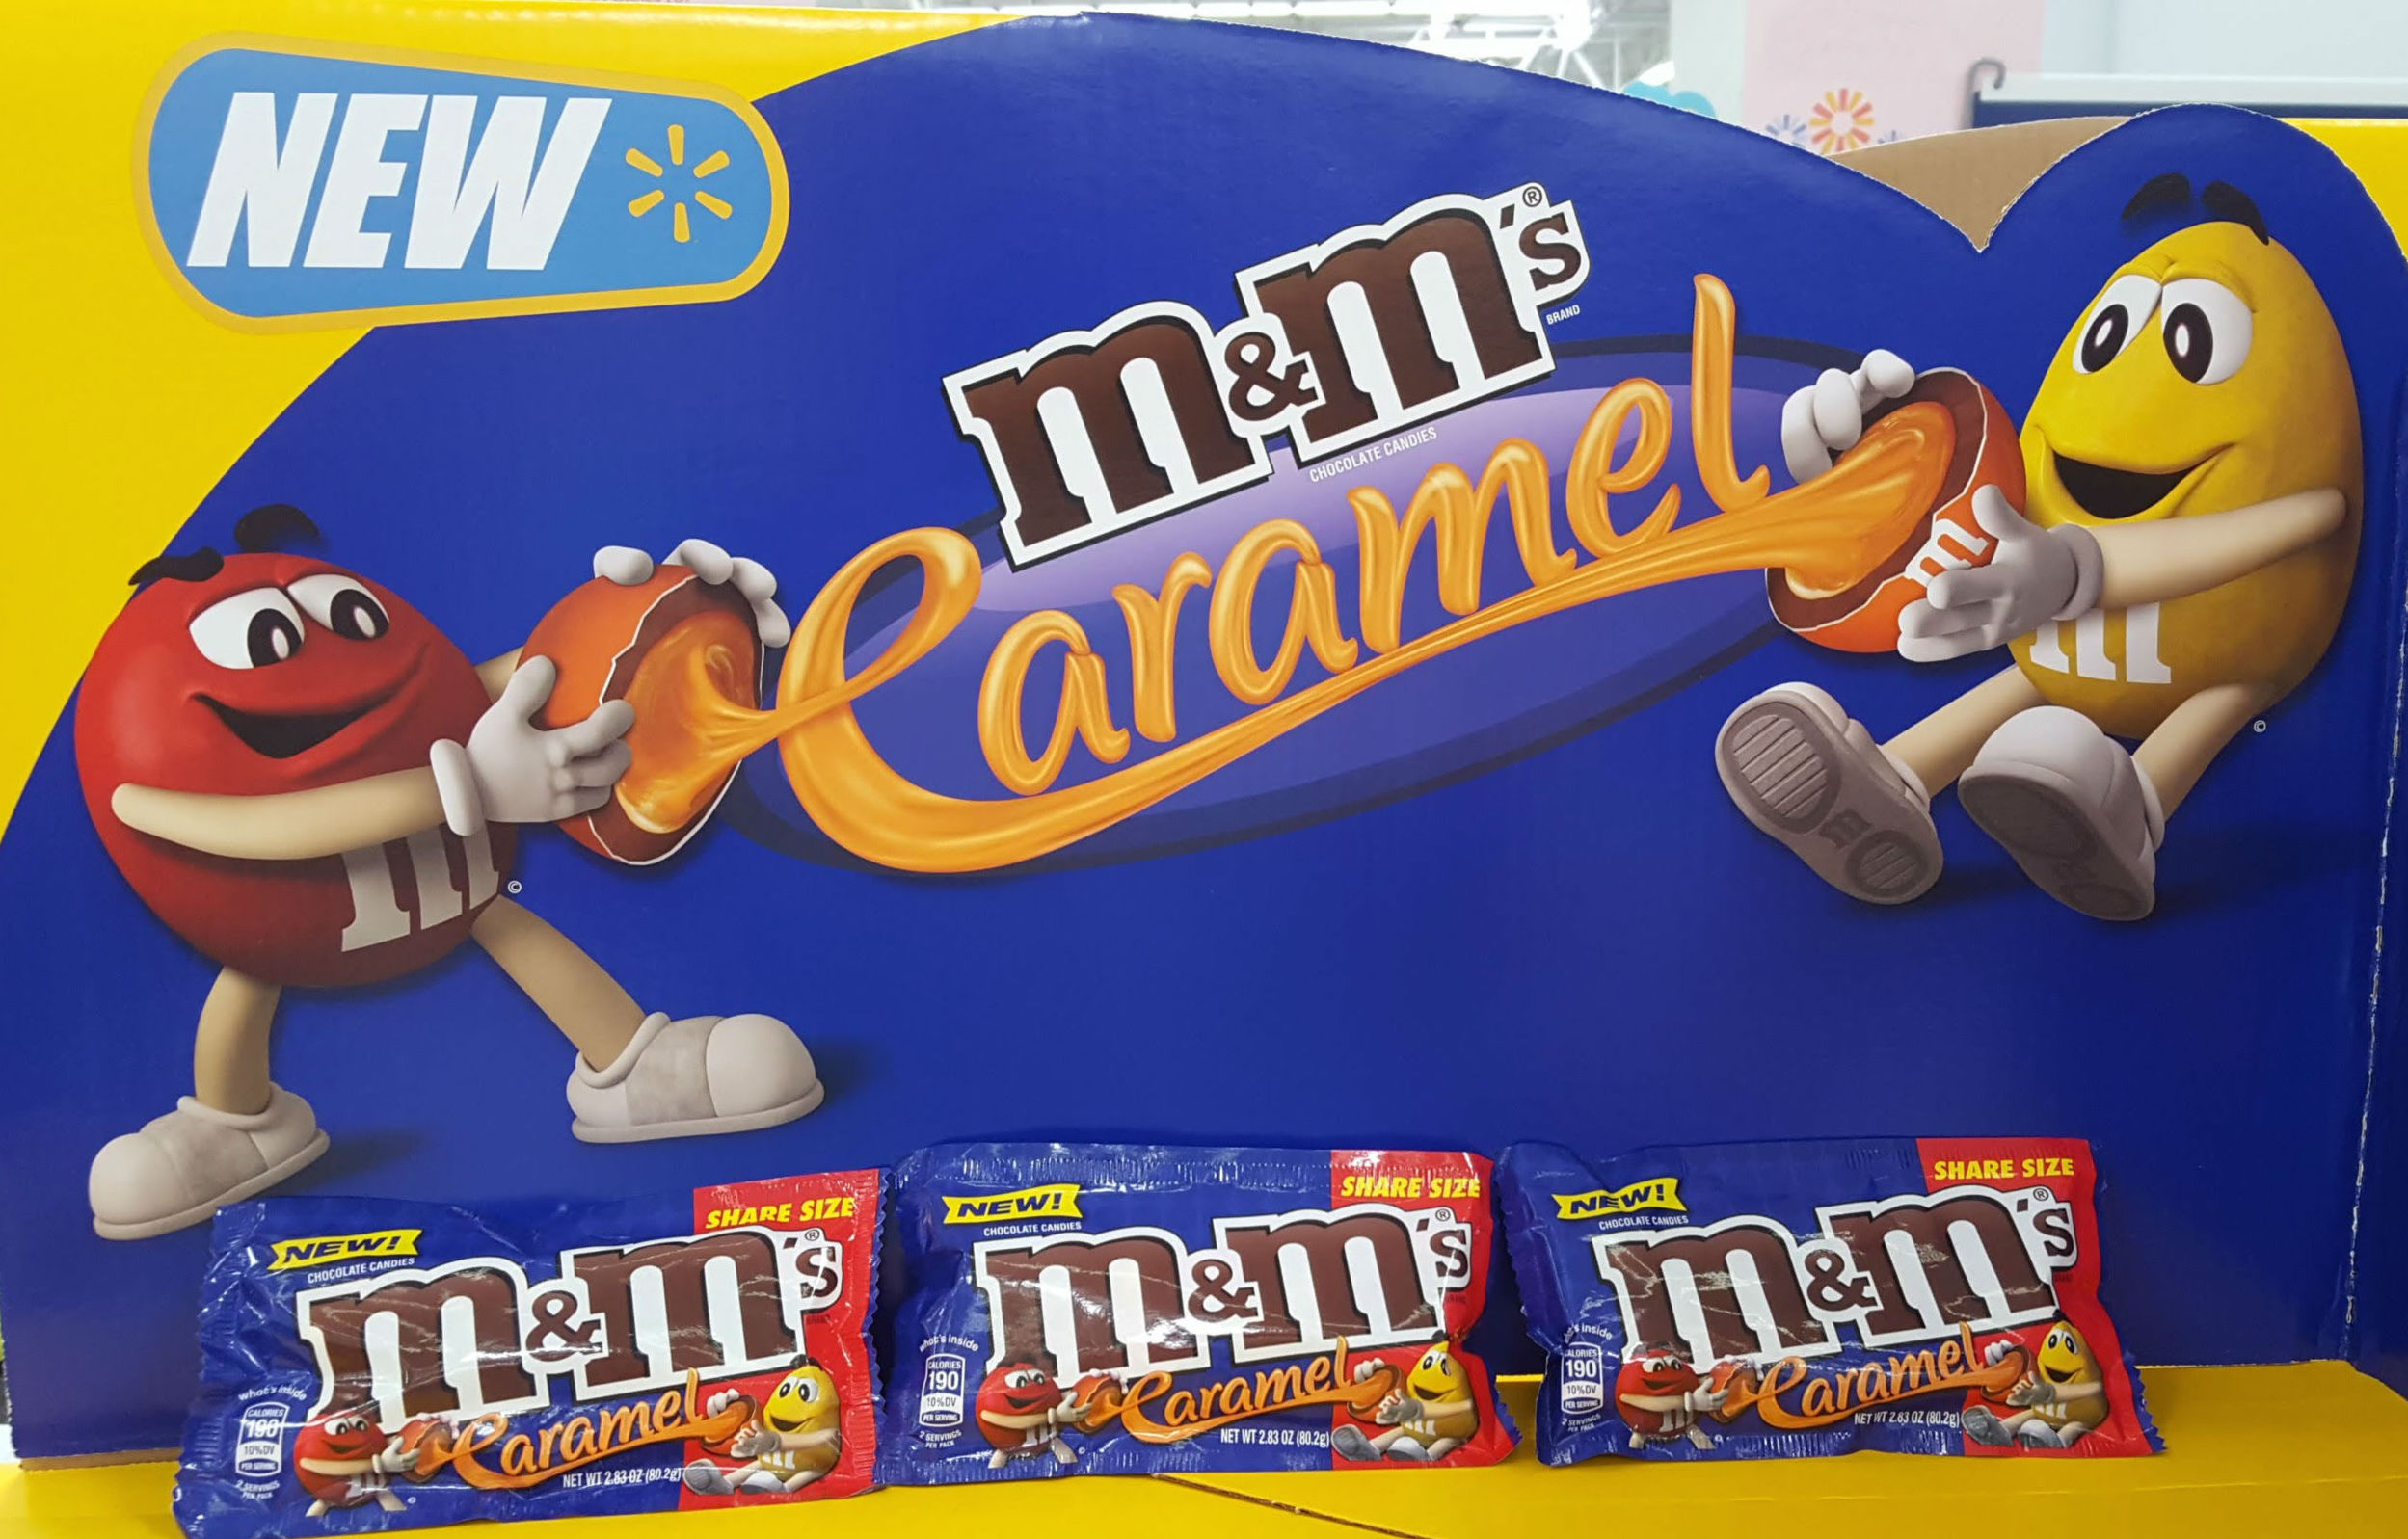 M&M's Crunchy Caramel Review 